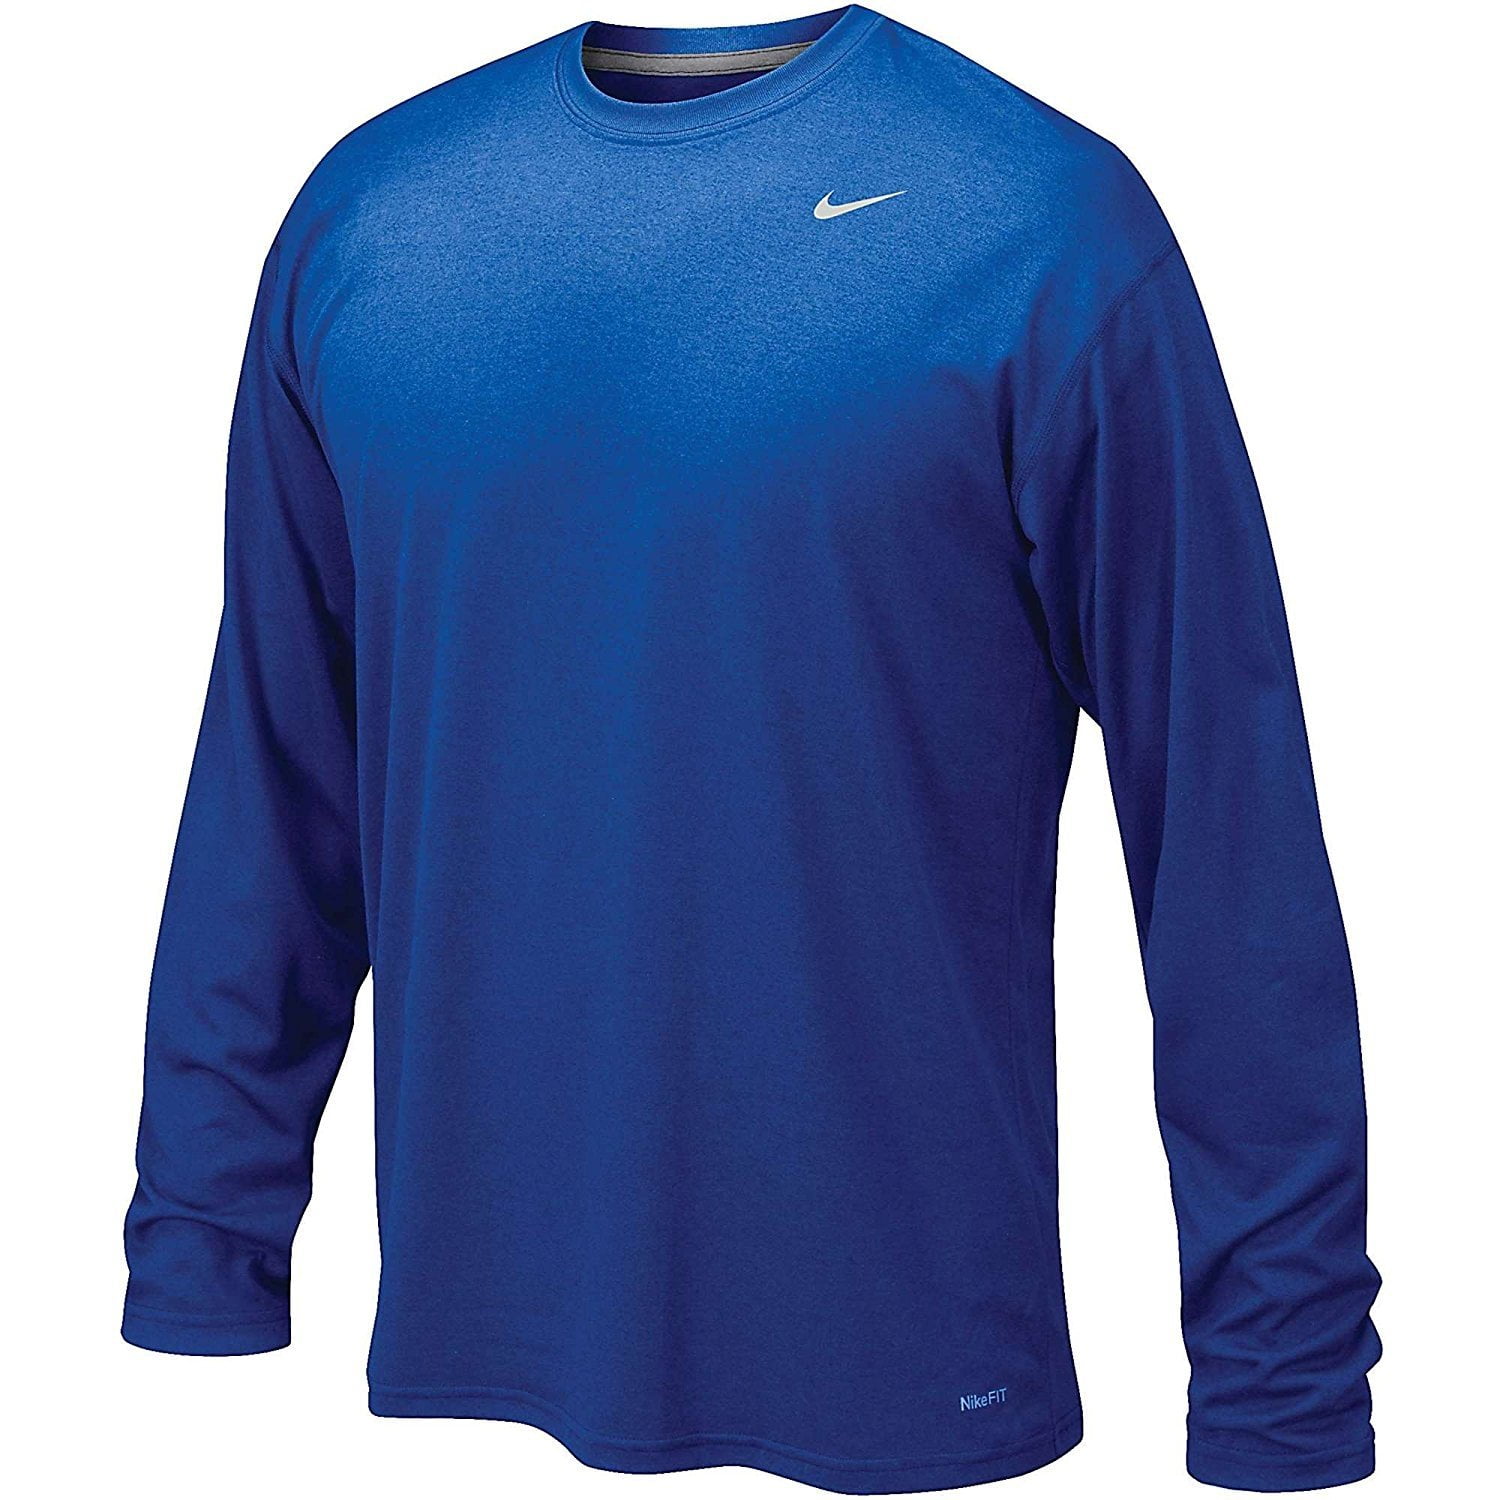 Nike - NIKE Men's Legend Long Sleeve Performance Shirt - Walmart.com ...